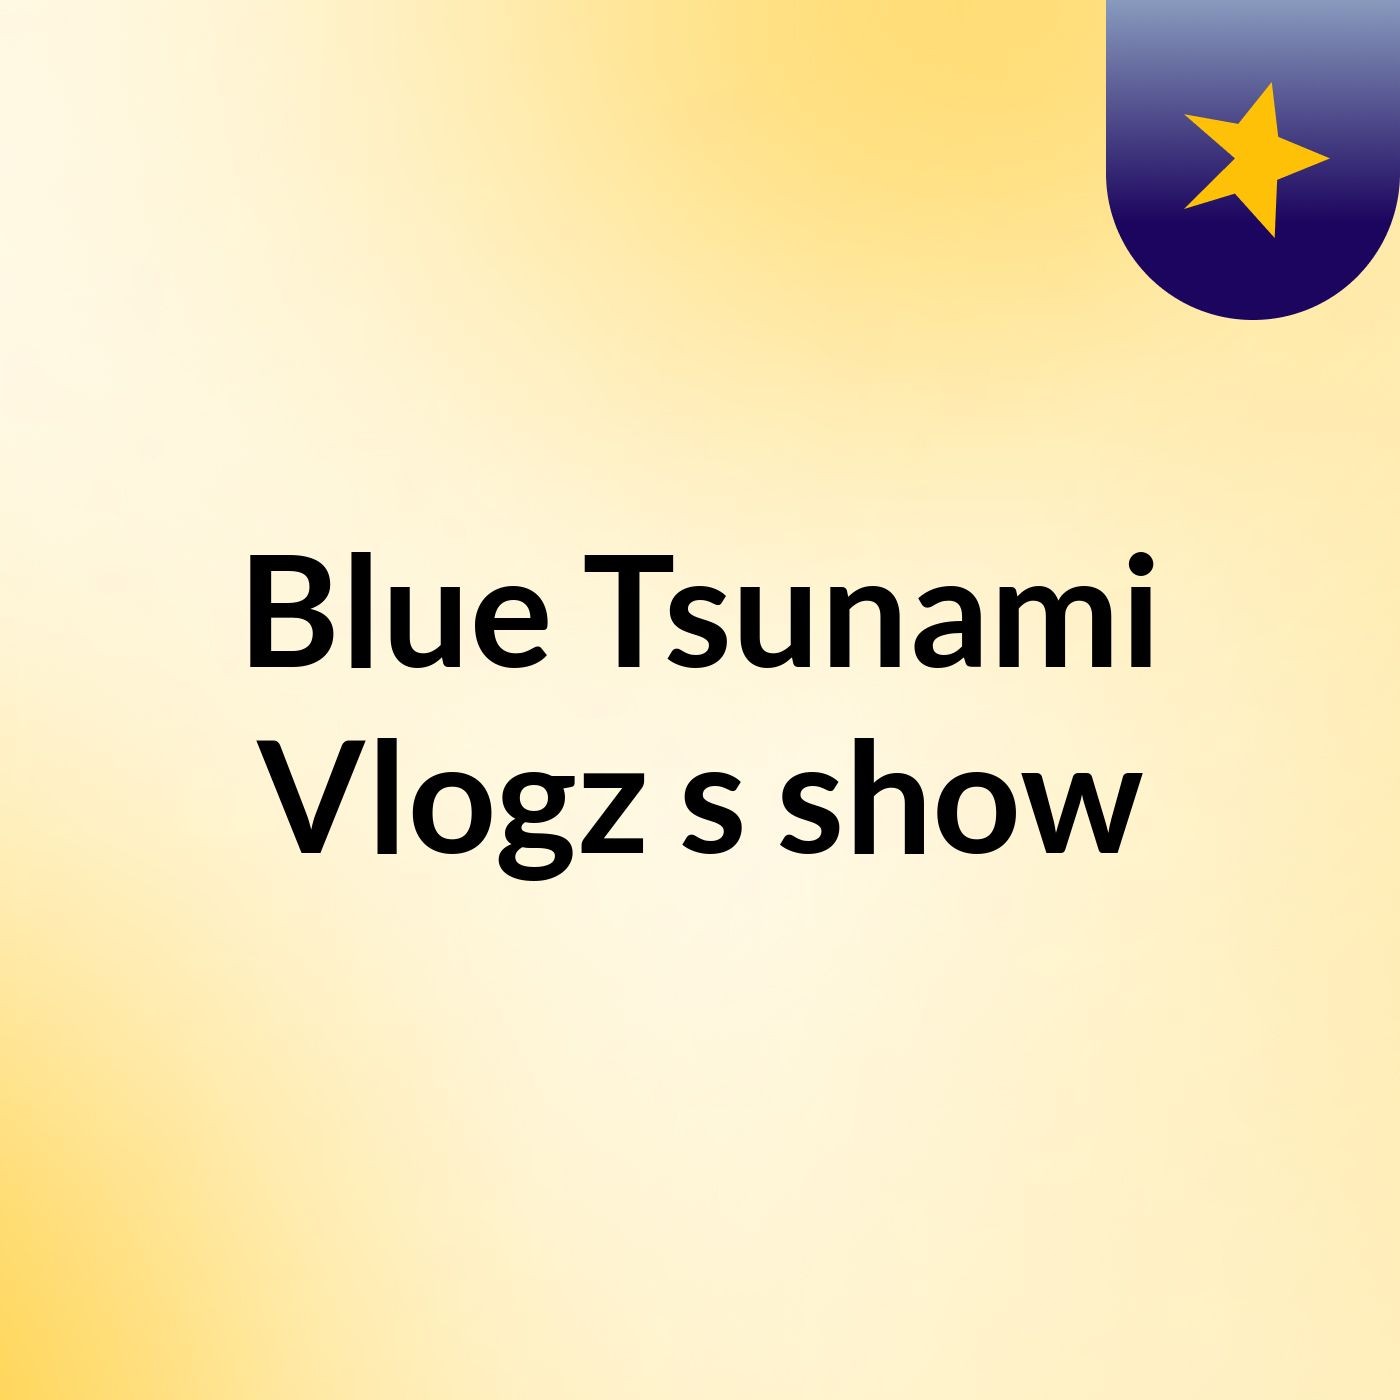 Blue Tsunami Vlogz's show